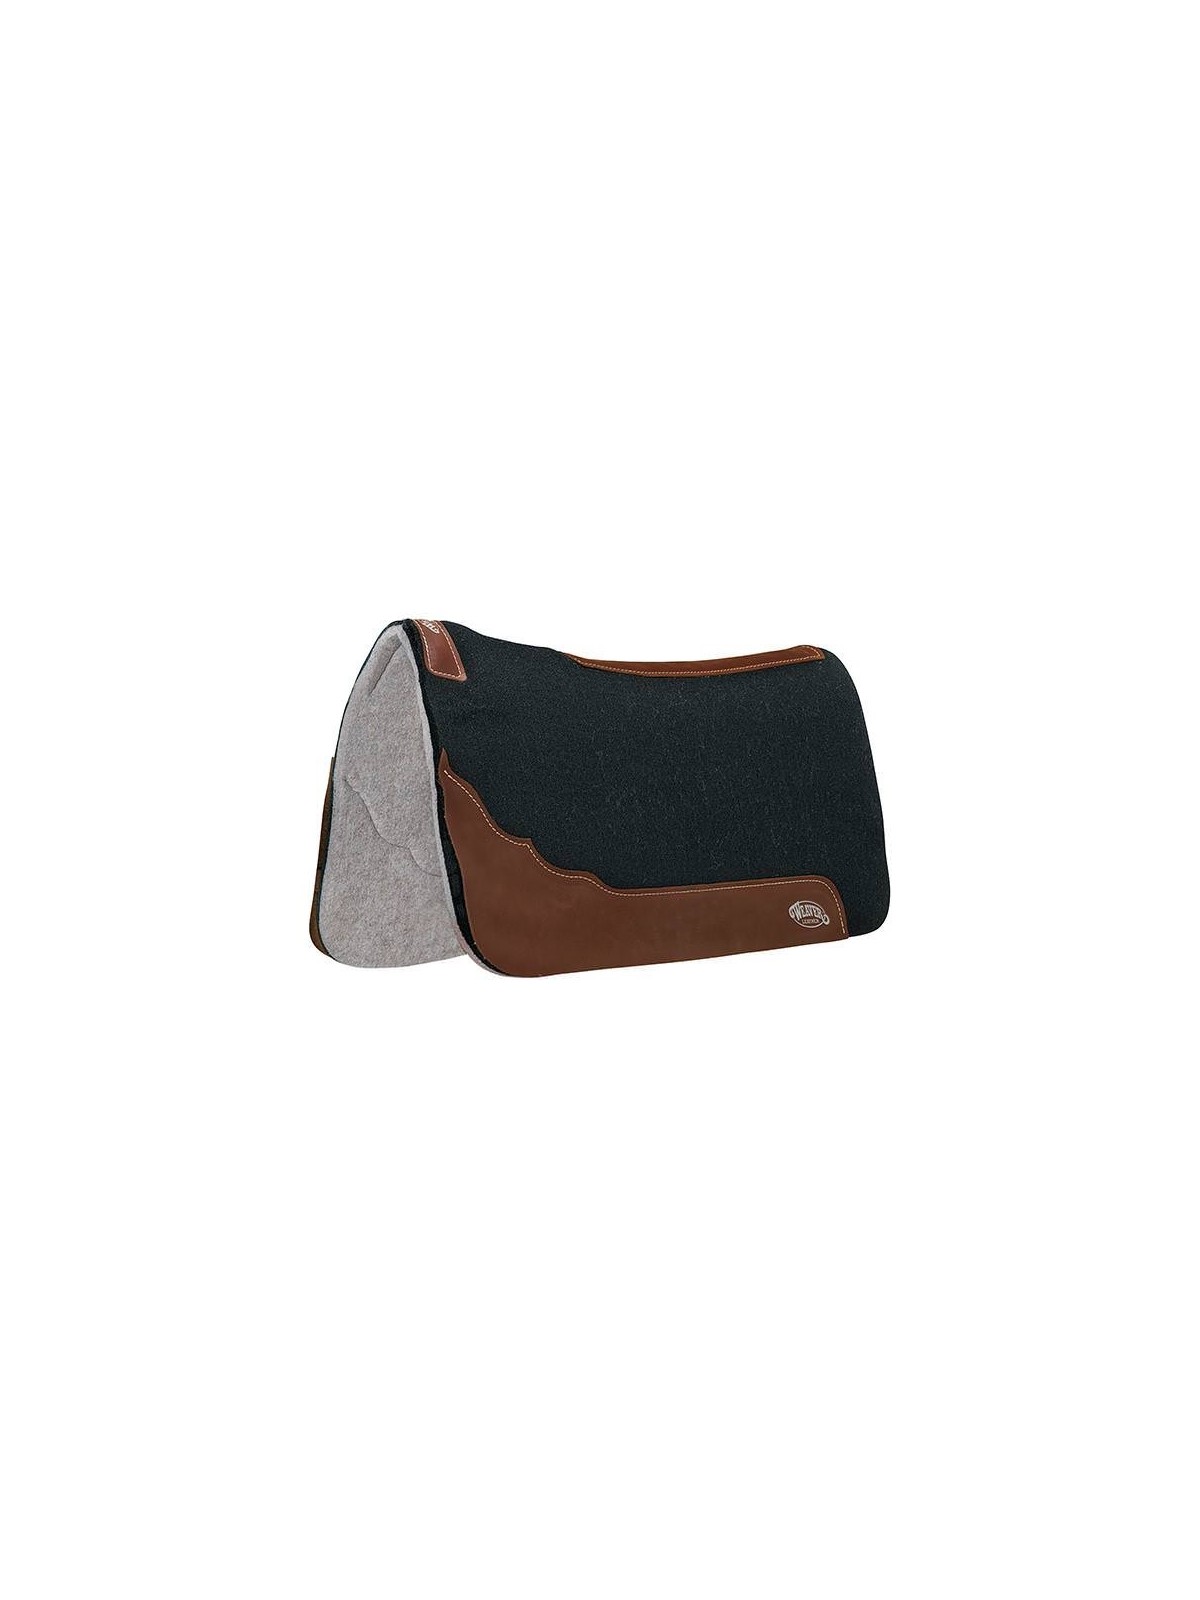 Weaver Leather 1" Contoured Two-Tone Felt Saddle Pad